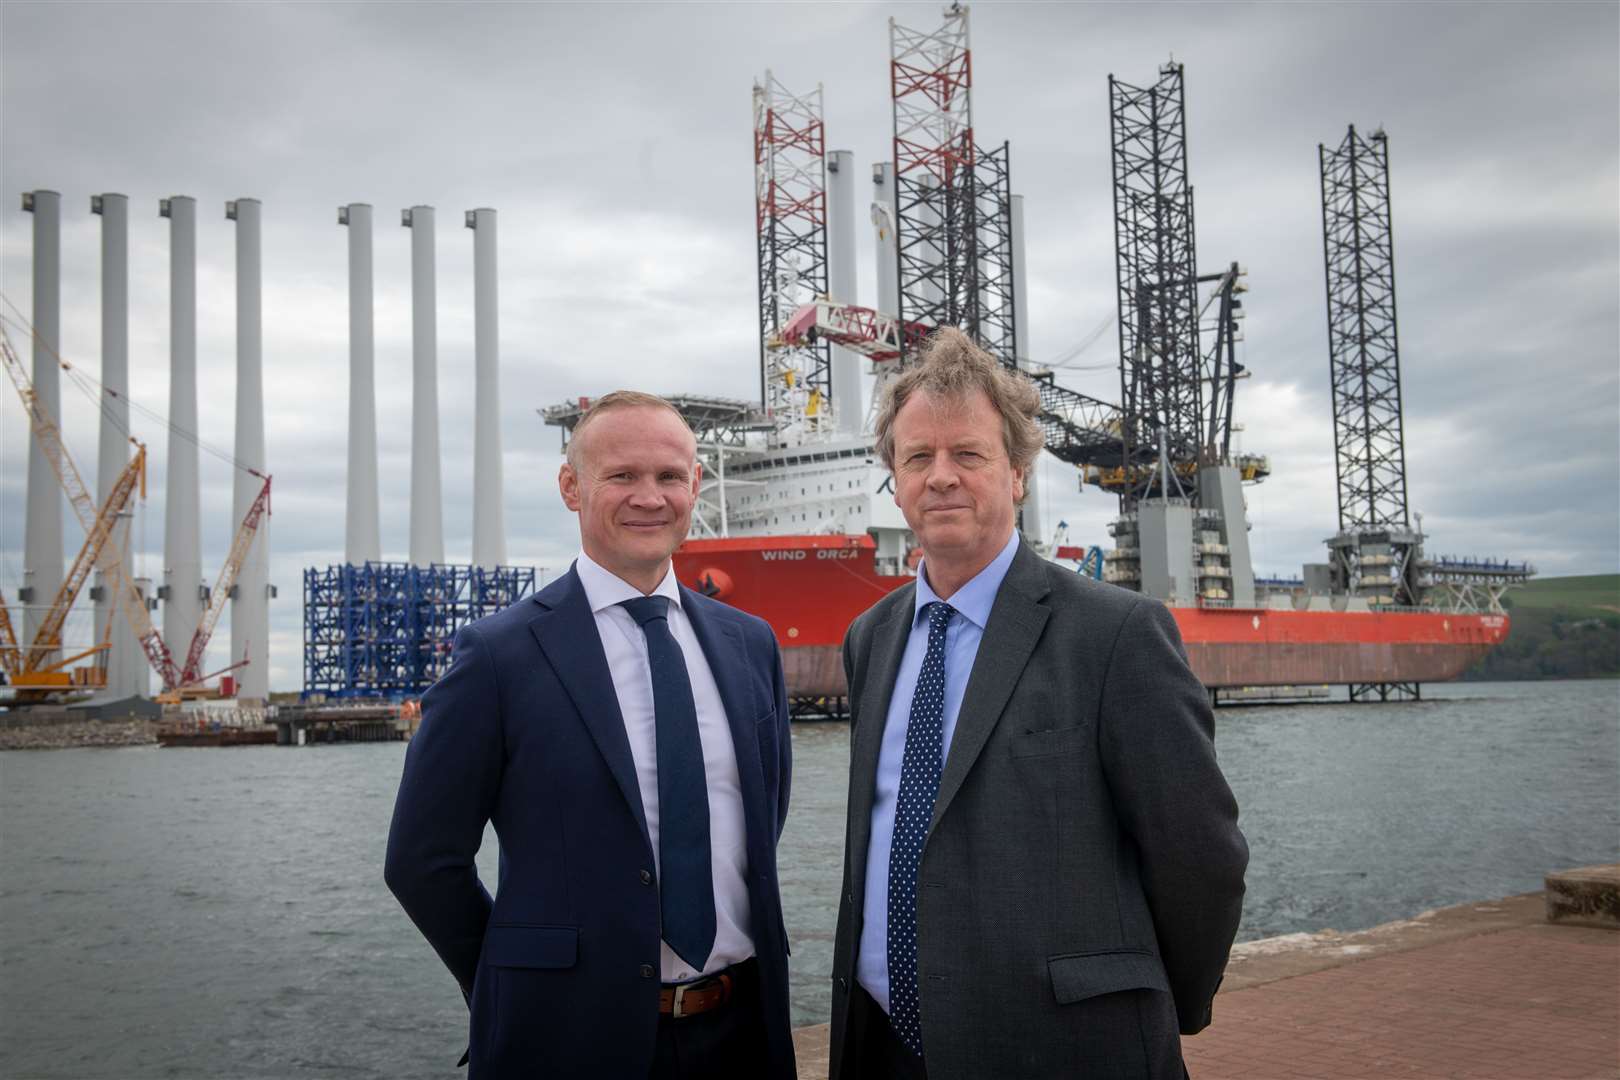 Iain Sinclair executive director of renewables (left) and Scottish Secretary Alister Jack. Picture: Callum Mackay.